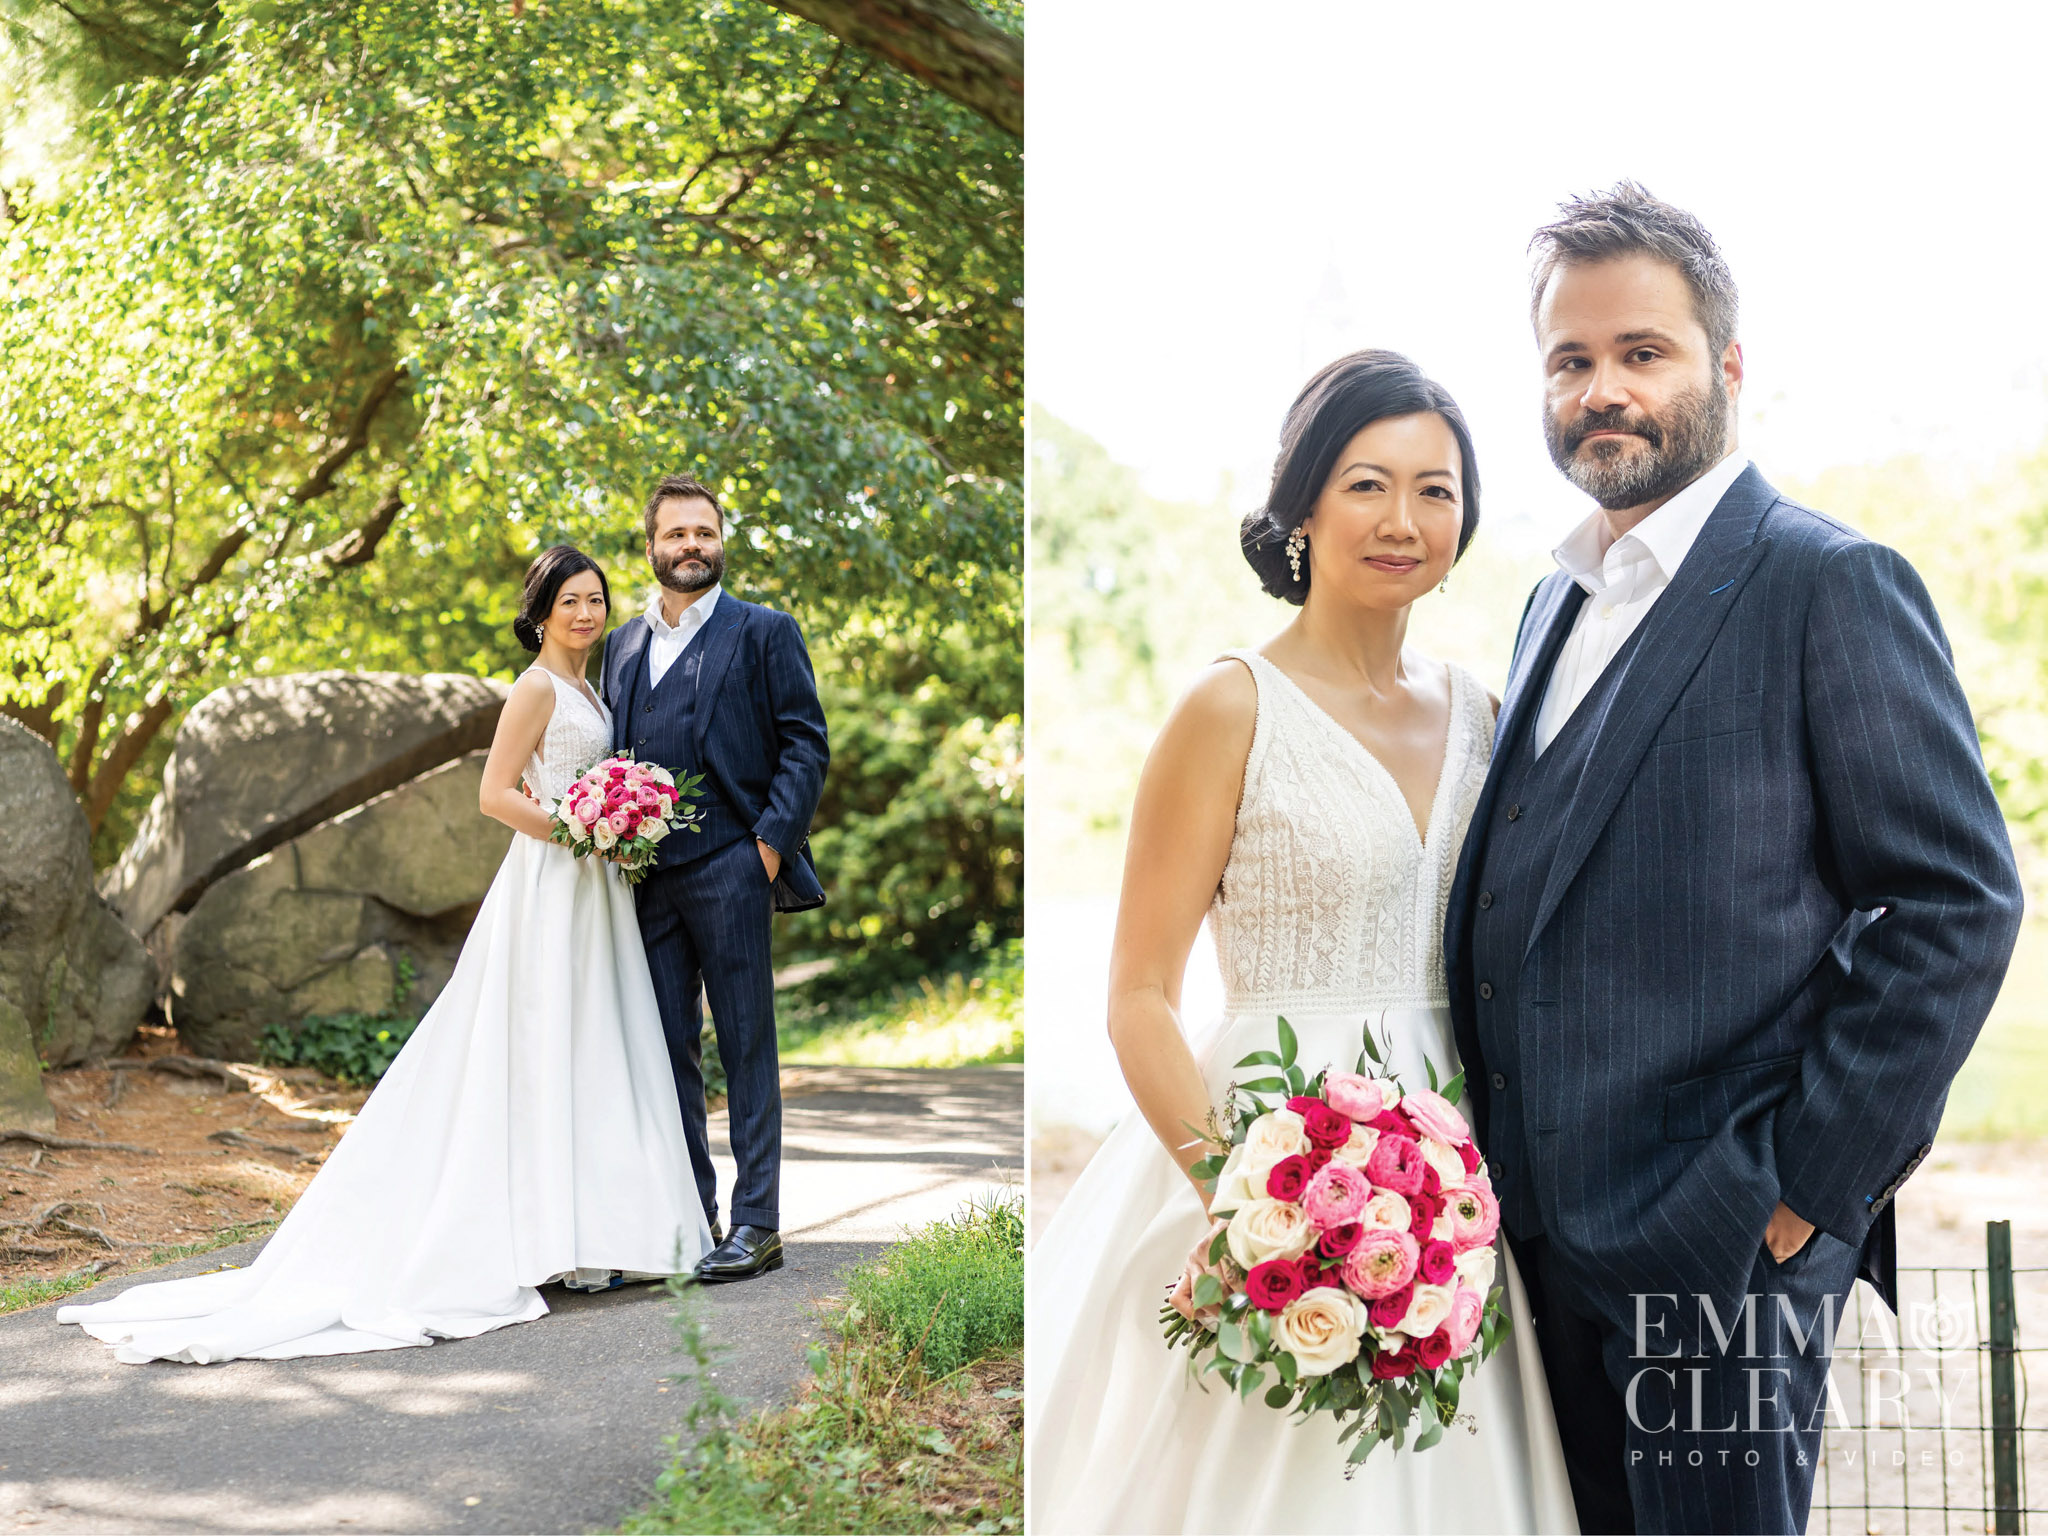 The Central Park Boathouse Wedding